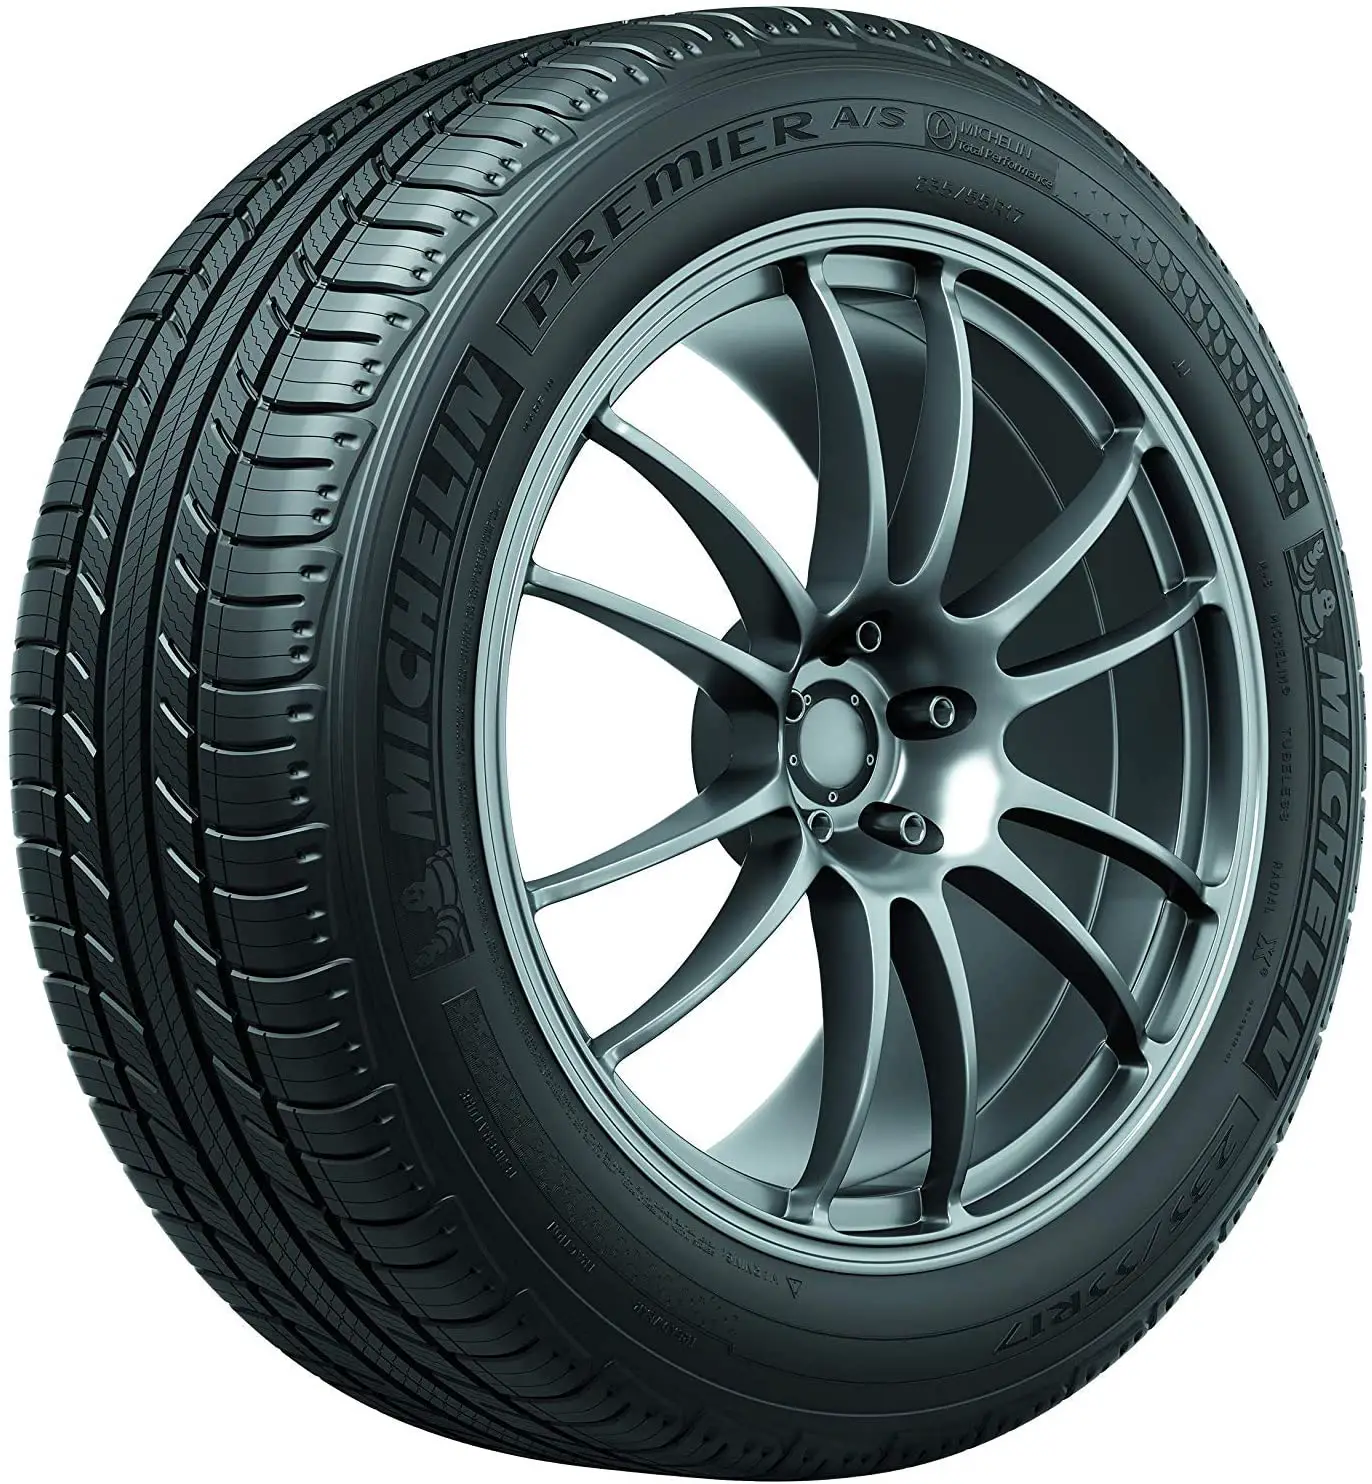 MICHELIN Premier A/S Tires